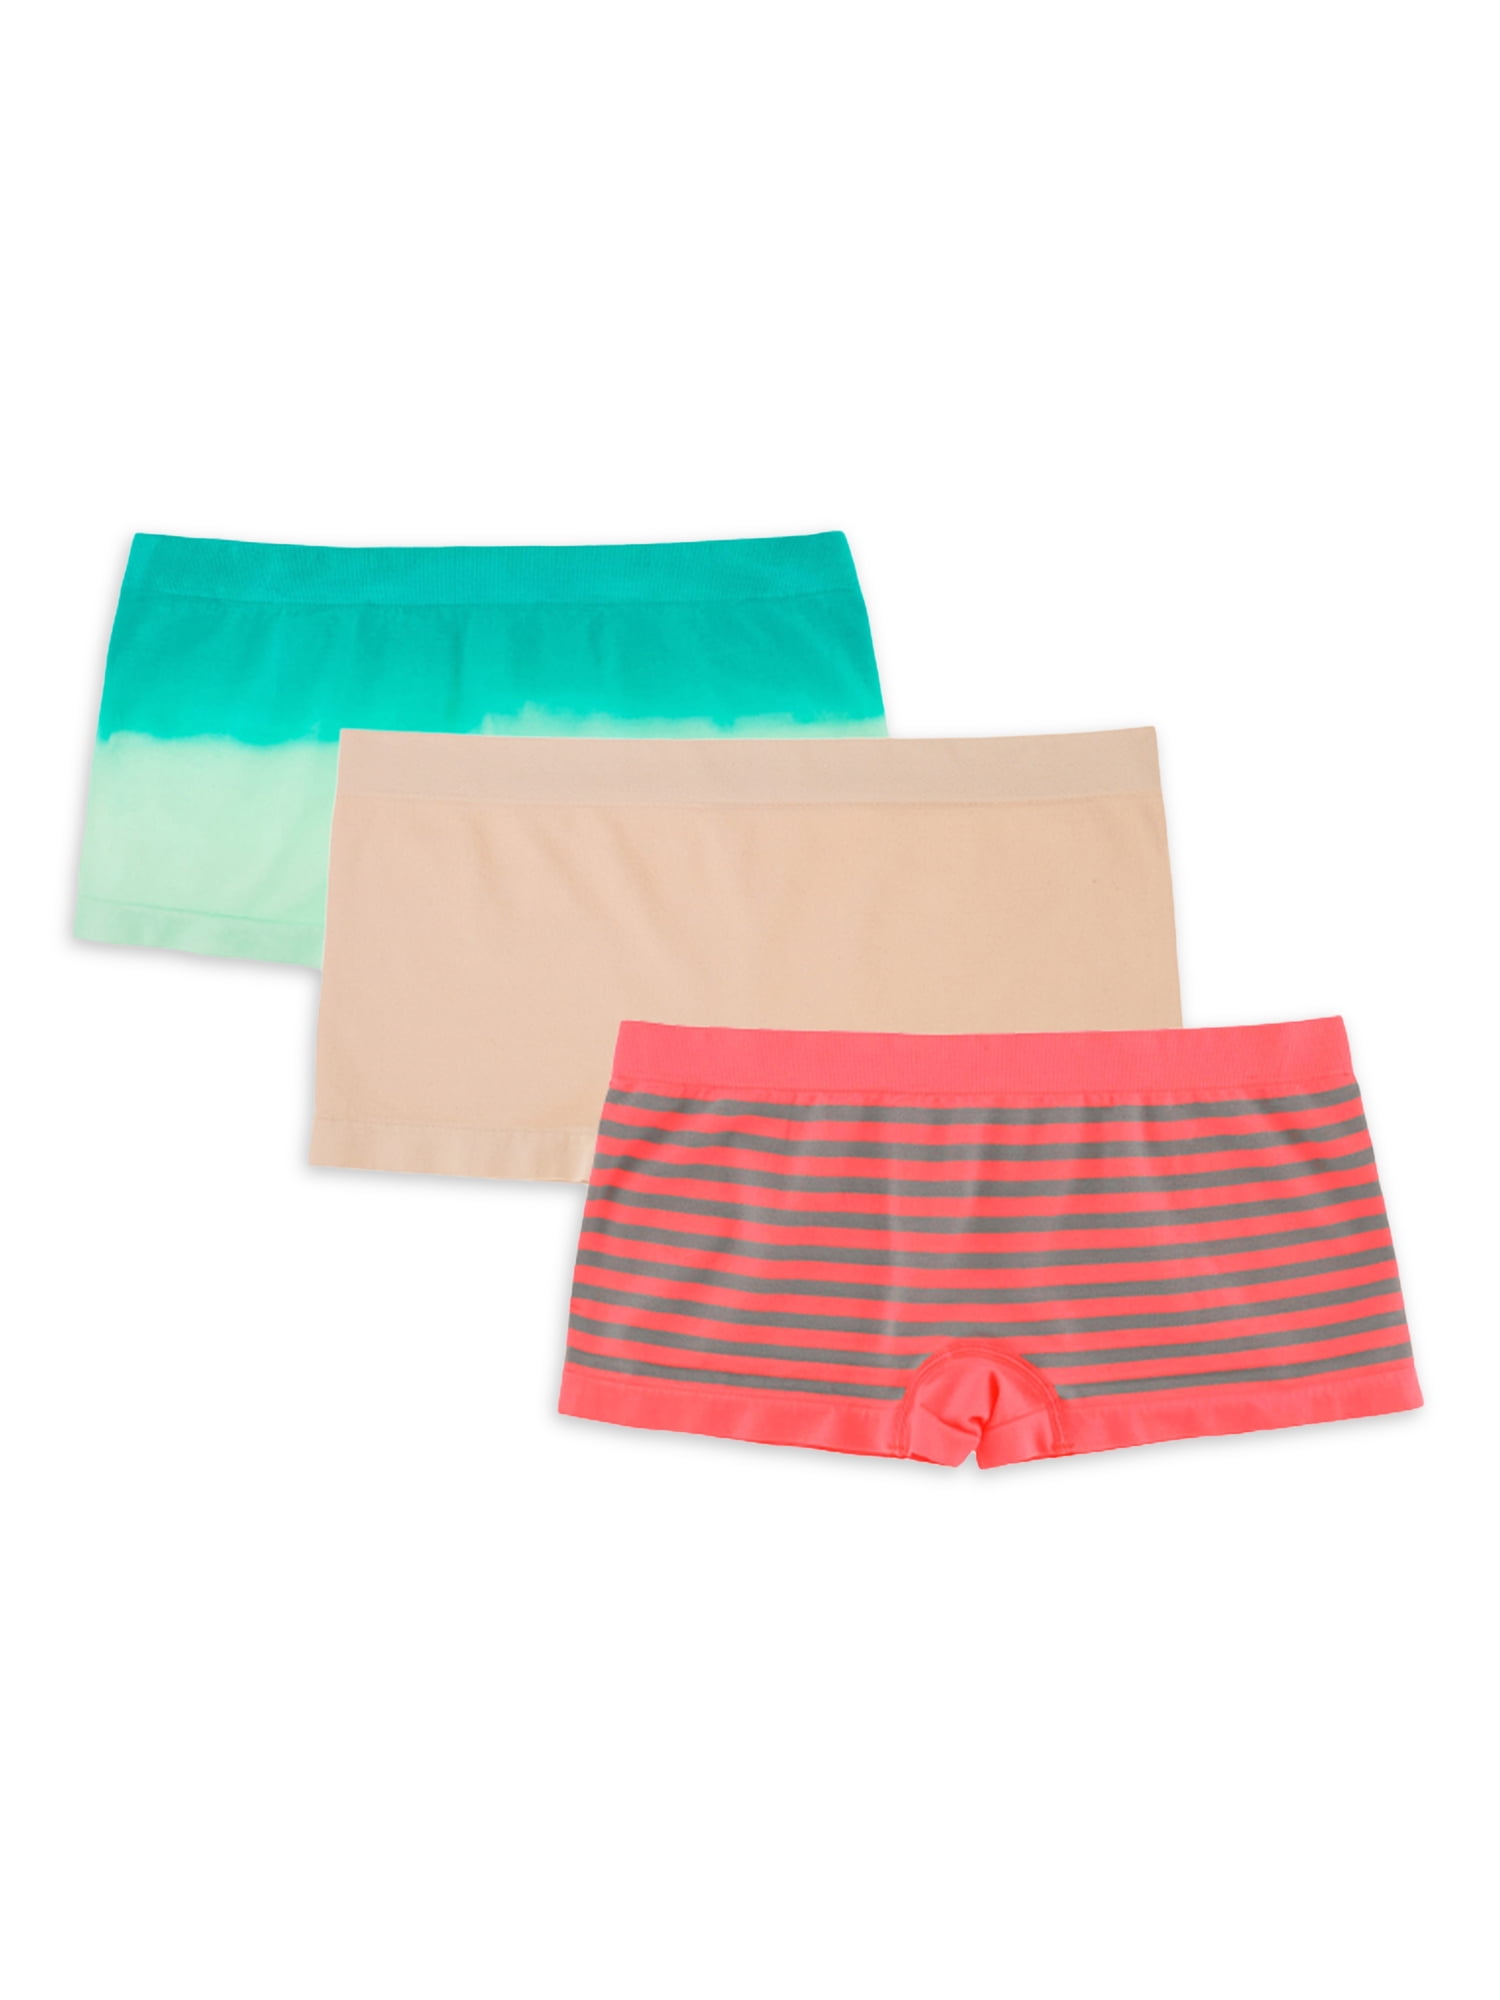 Boyshort/Bikini Women Seamless Stretch Panty 12pcs Set 